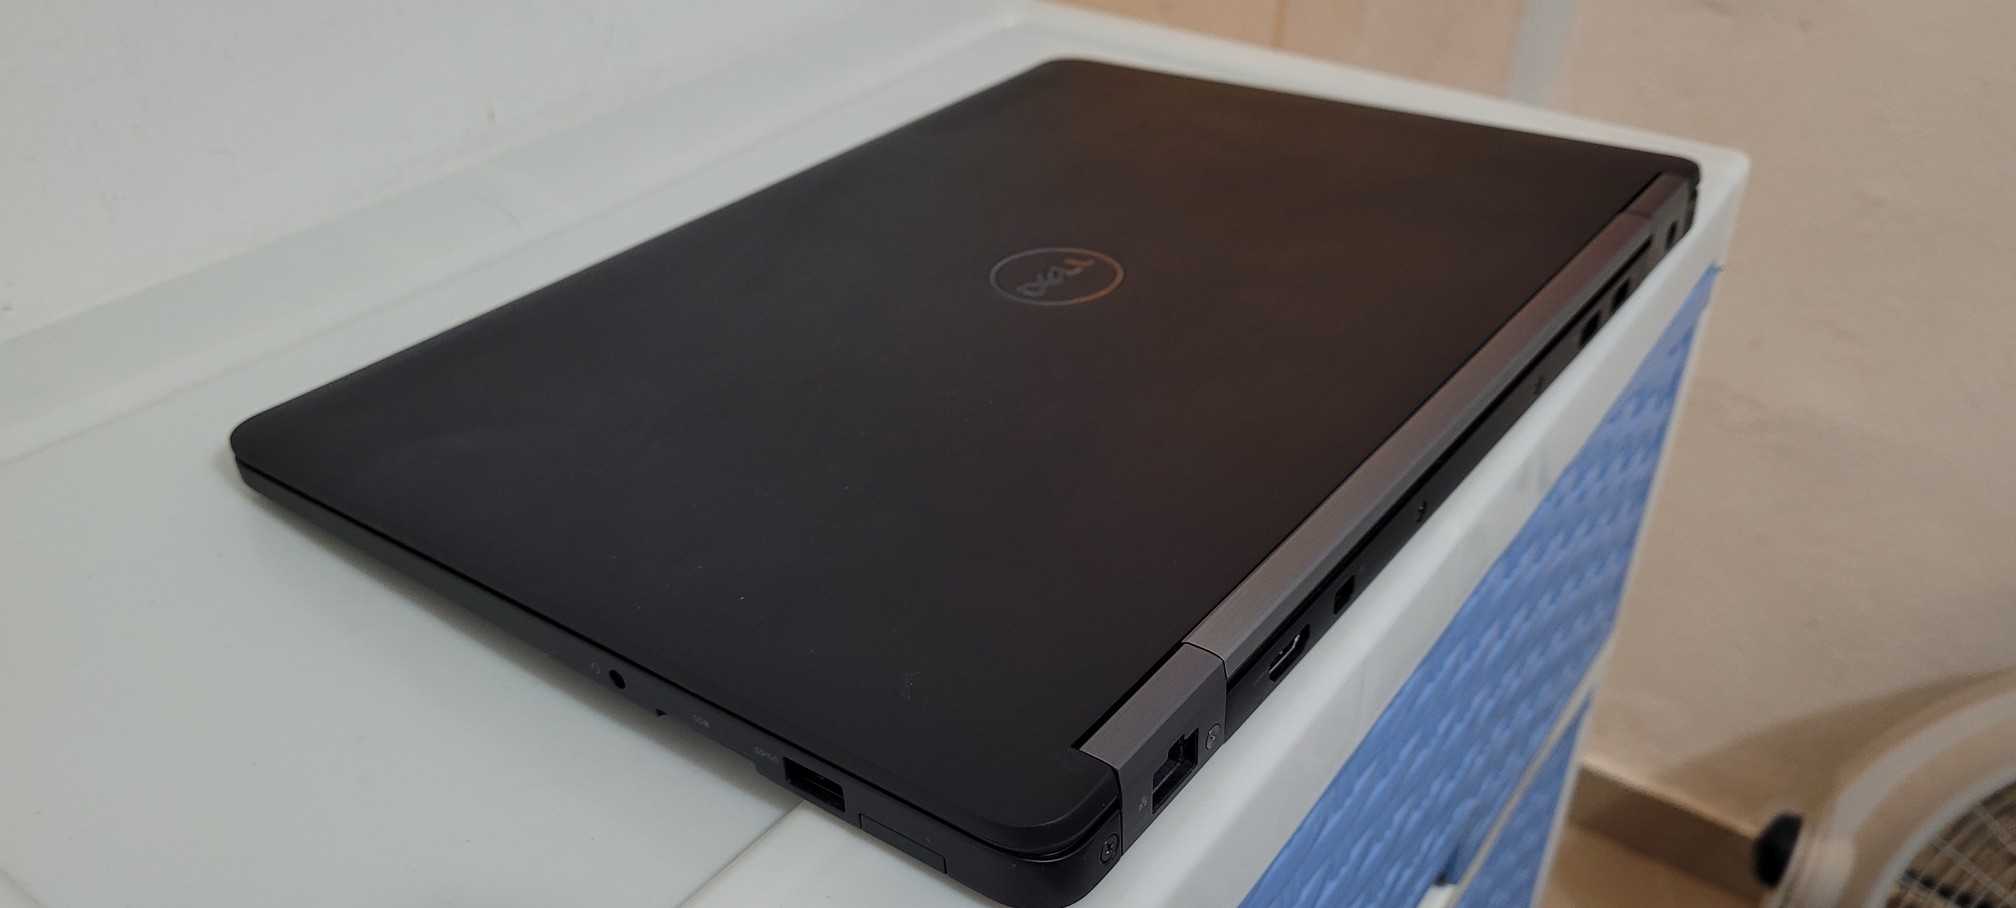 computadoras y laptops - Laptop Dell 7490 14 Pulg Core i7 8va Gen Ram 16gb ddr4 Disco 512gb SSD Video 8gb 2